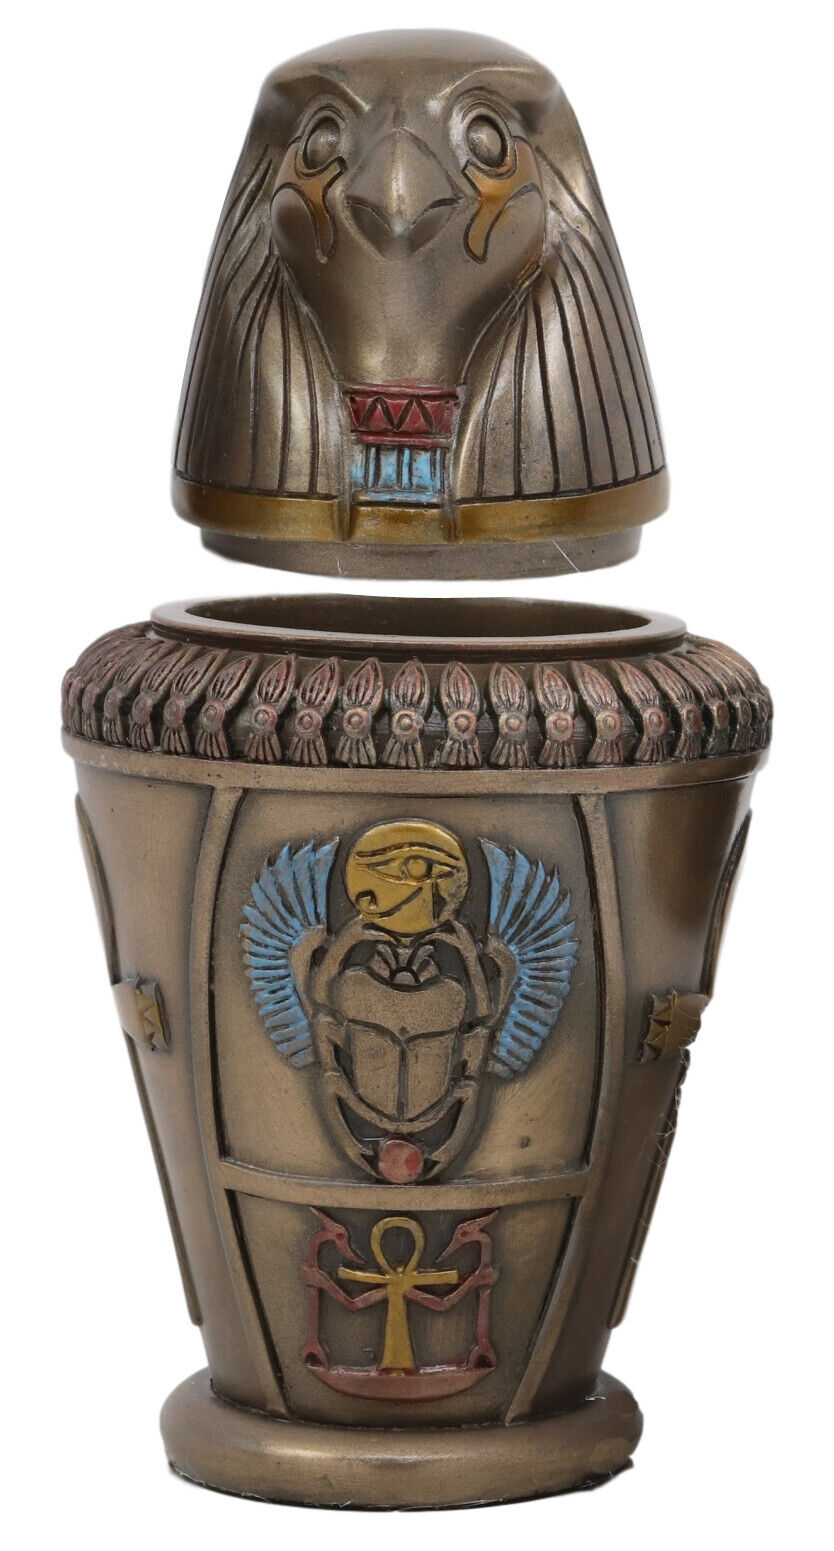 Ebros Ancient Egypt Gods and Deities Qebehsenuef Canopic Jar Urn Statue 5.75